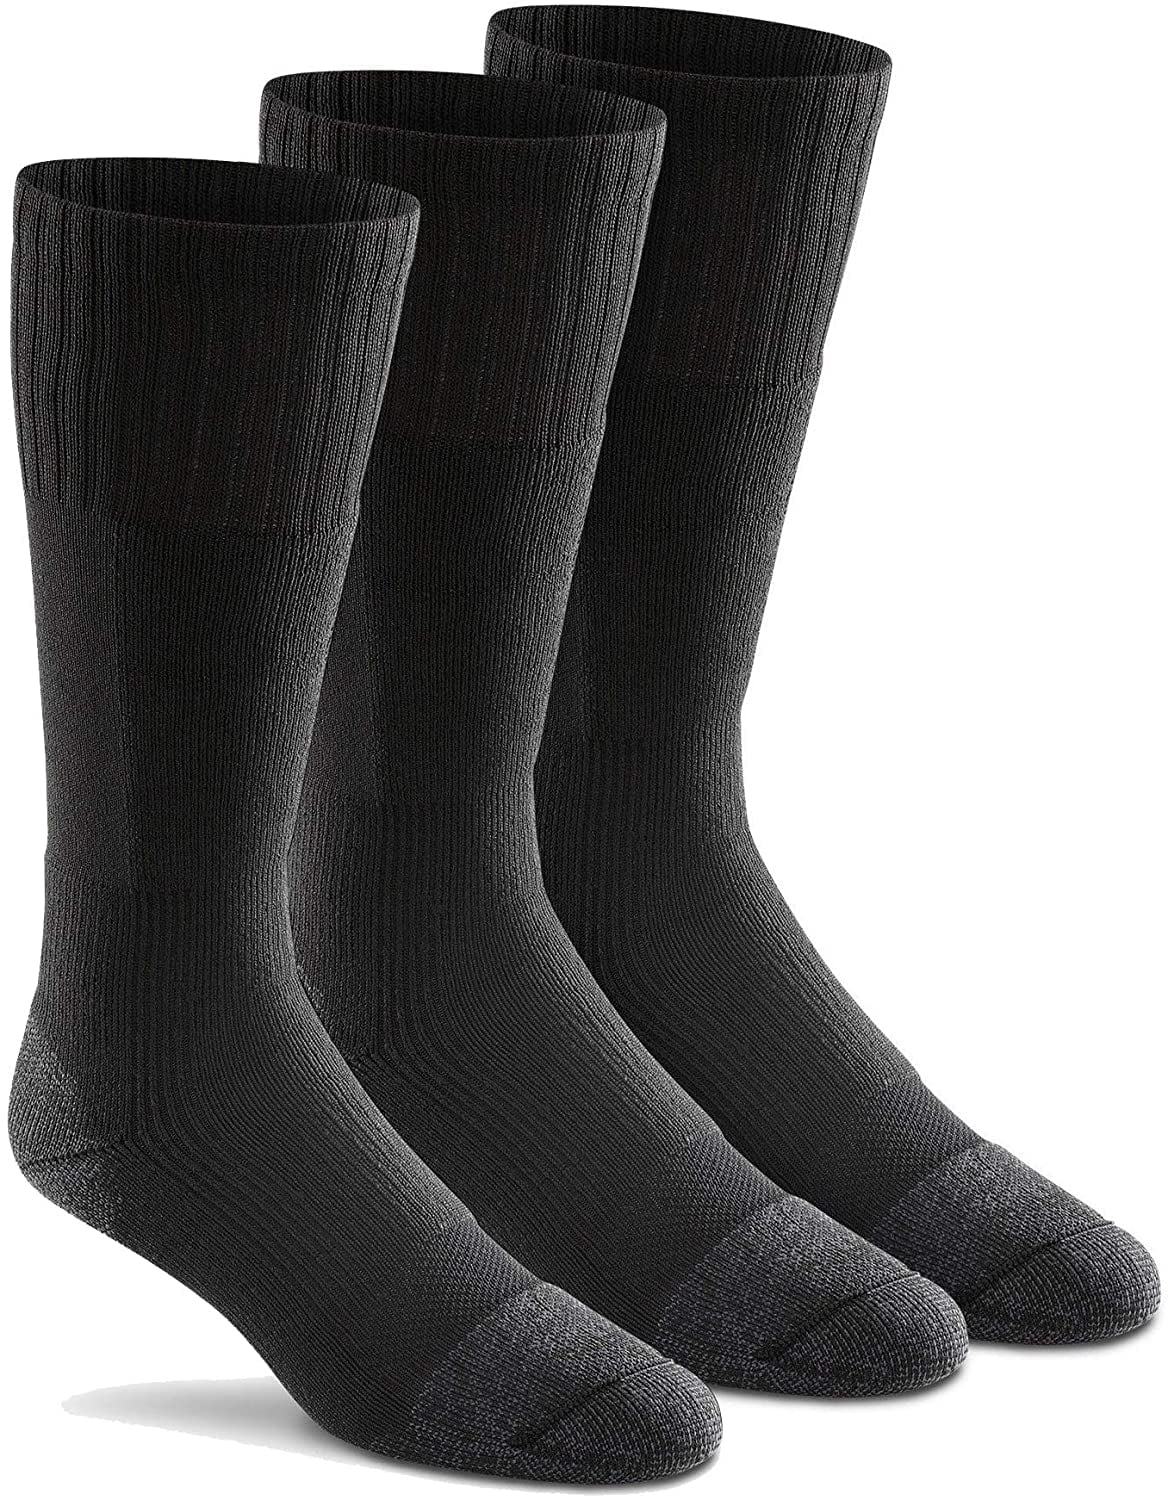 Fox River Military Wick Dry Maximum Mid Calf Boot Sock Black Large 